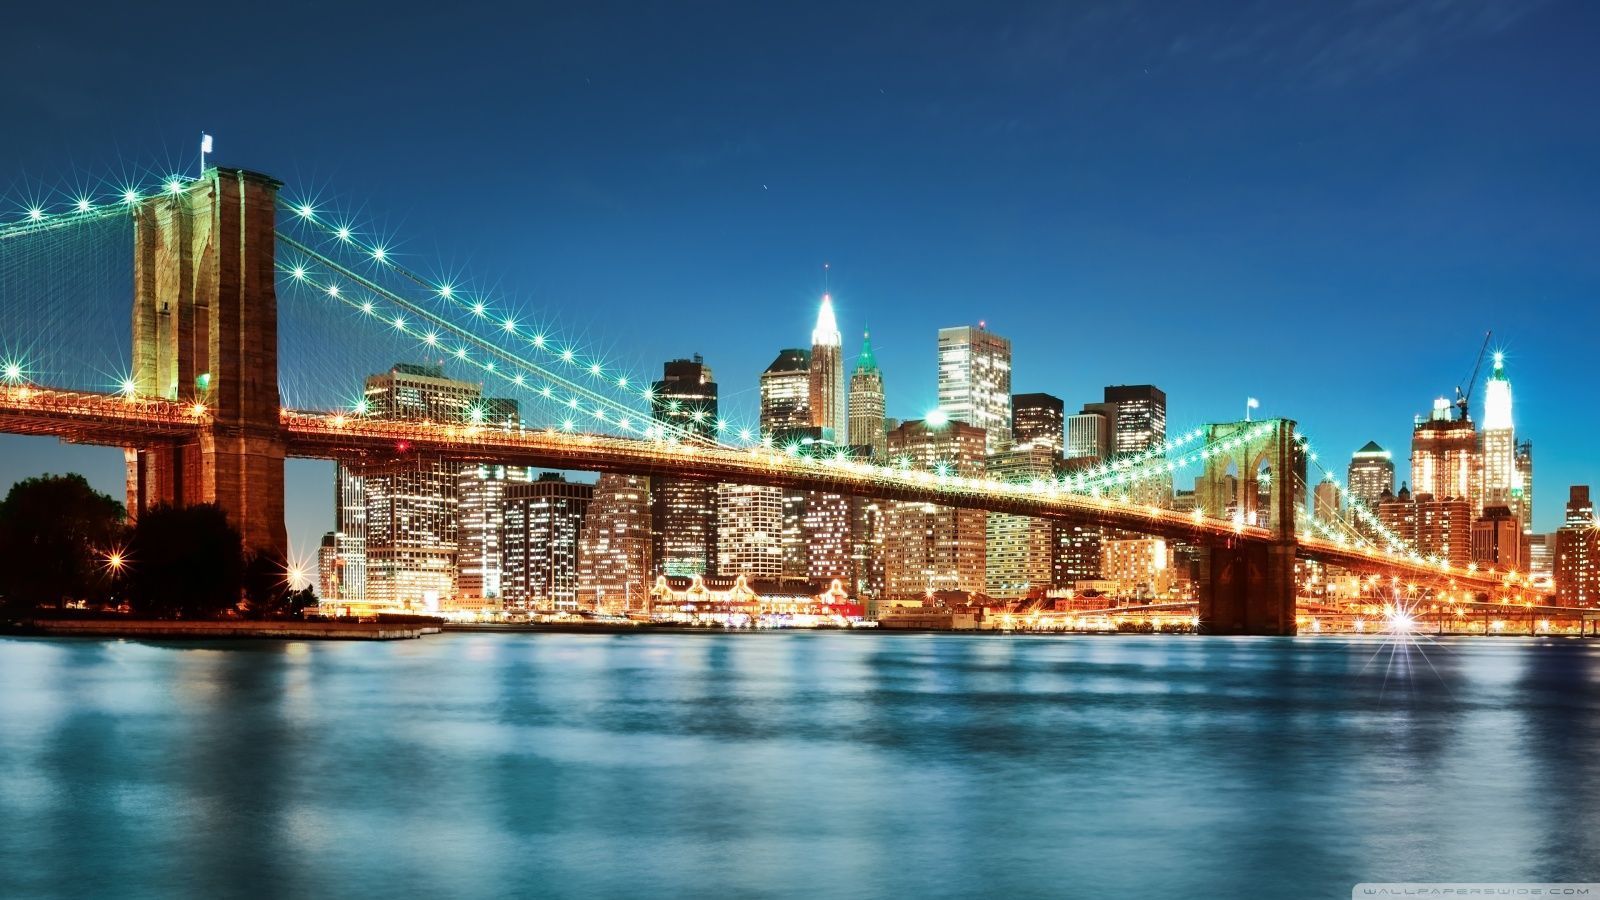 New York City night lights wallpaper 49572 - City impression ...